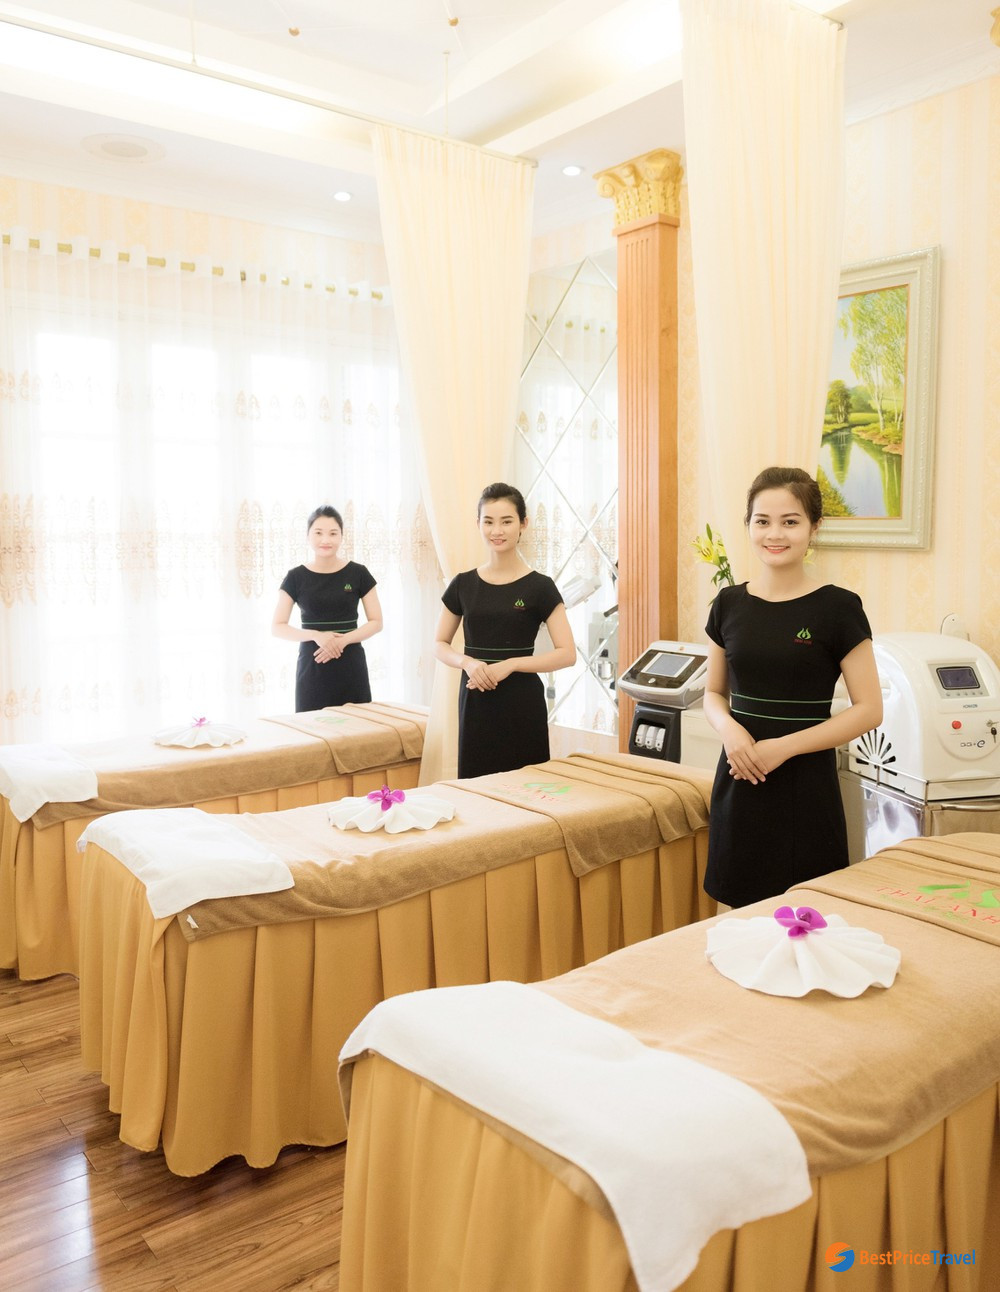 Staffs in a Vietnamese spa